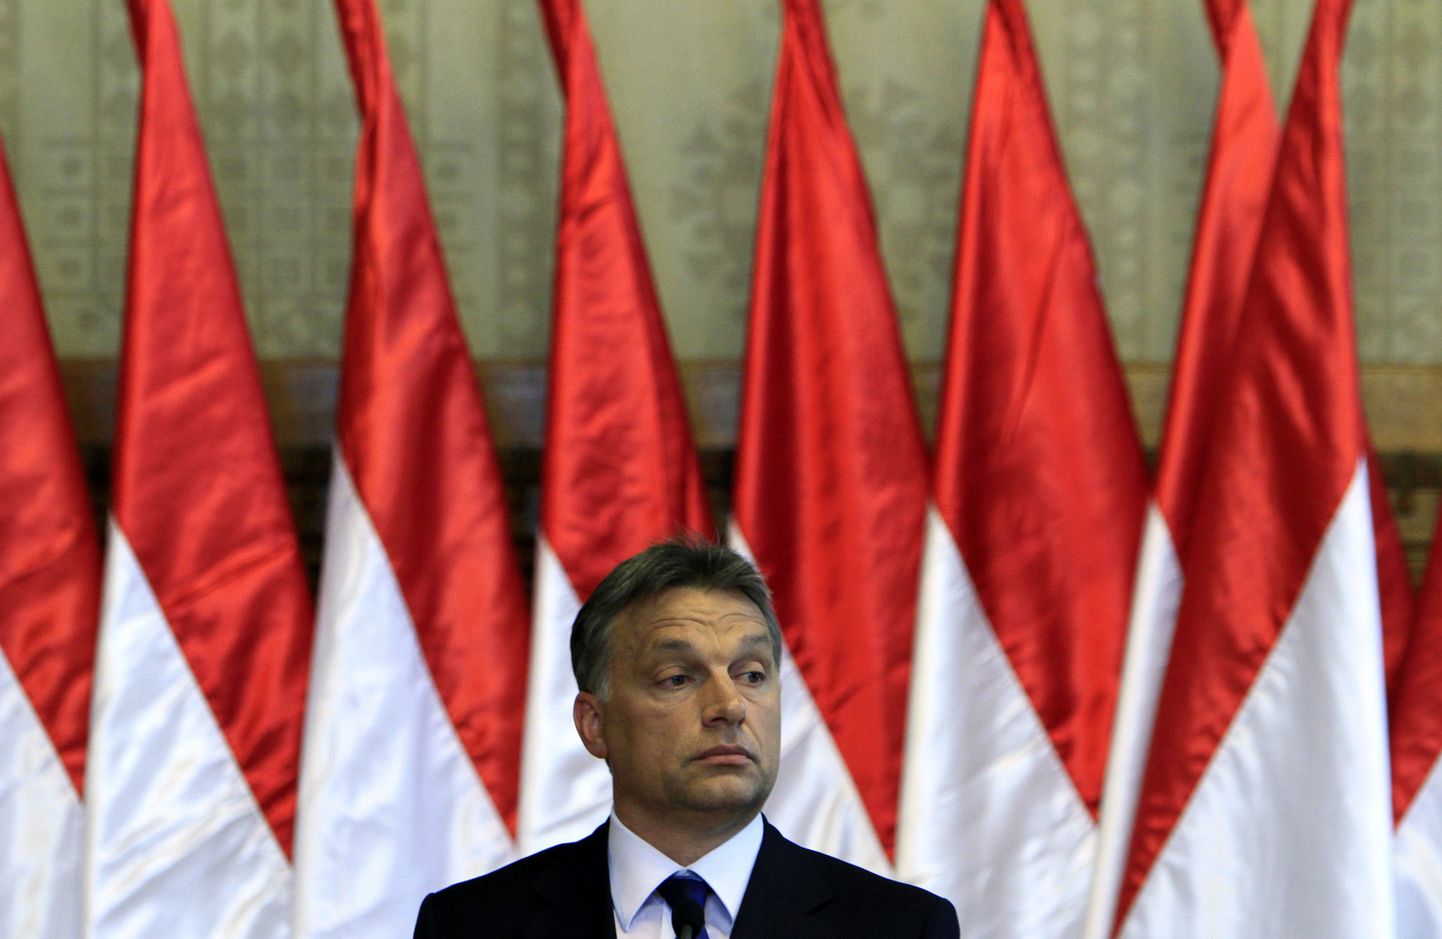 Ungari valitsusjuht Viktor Orbán.